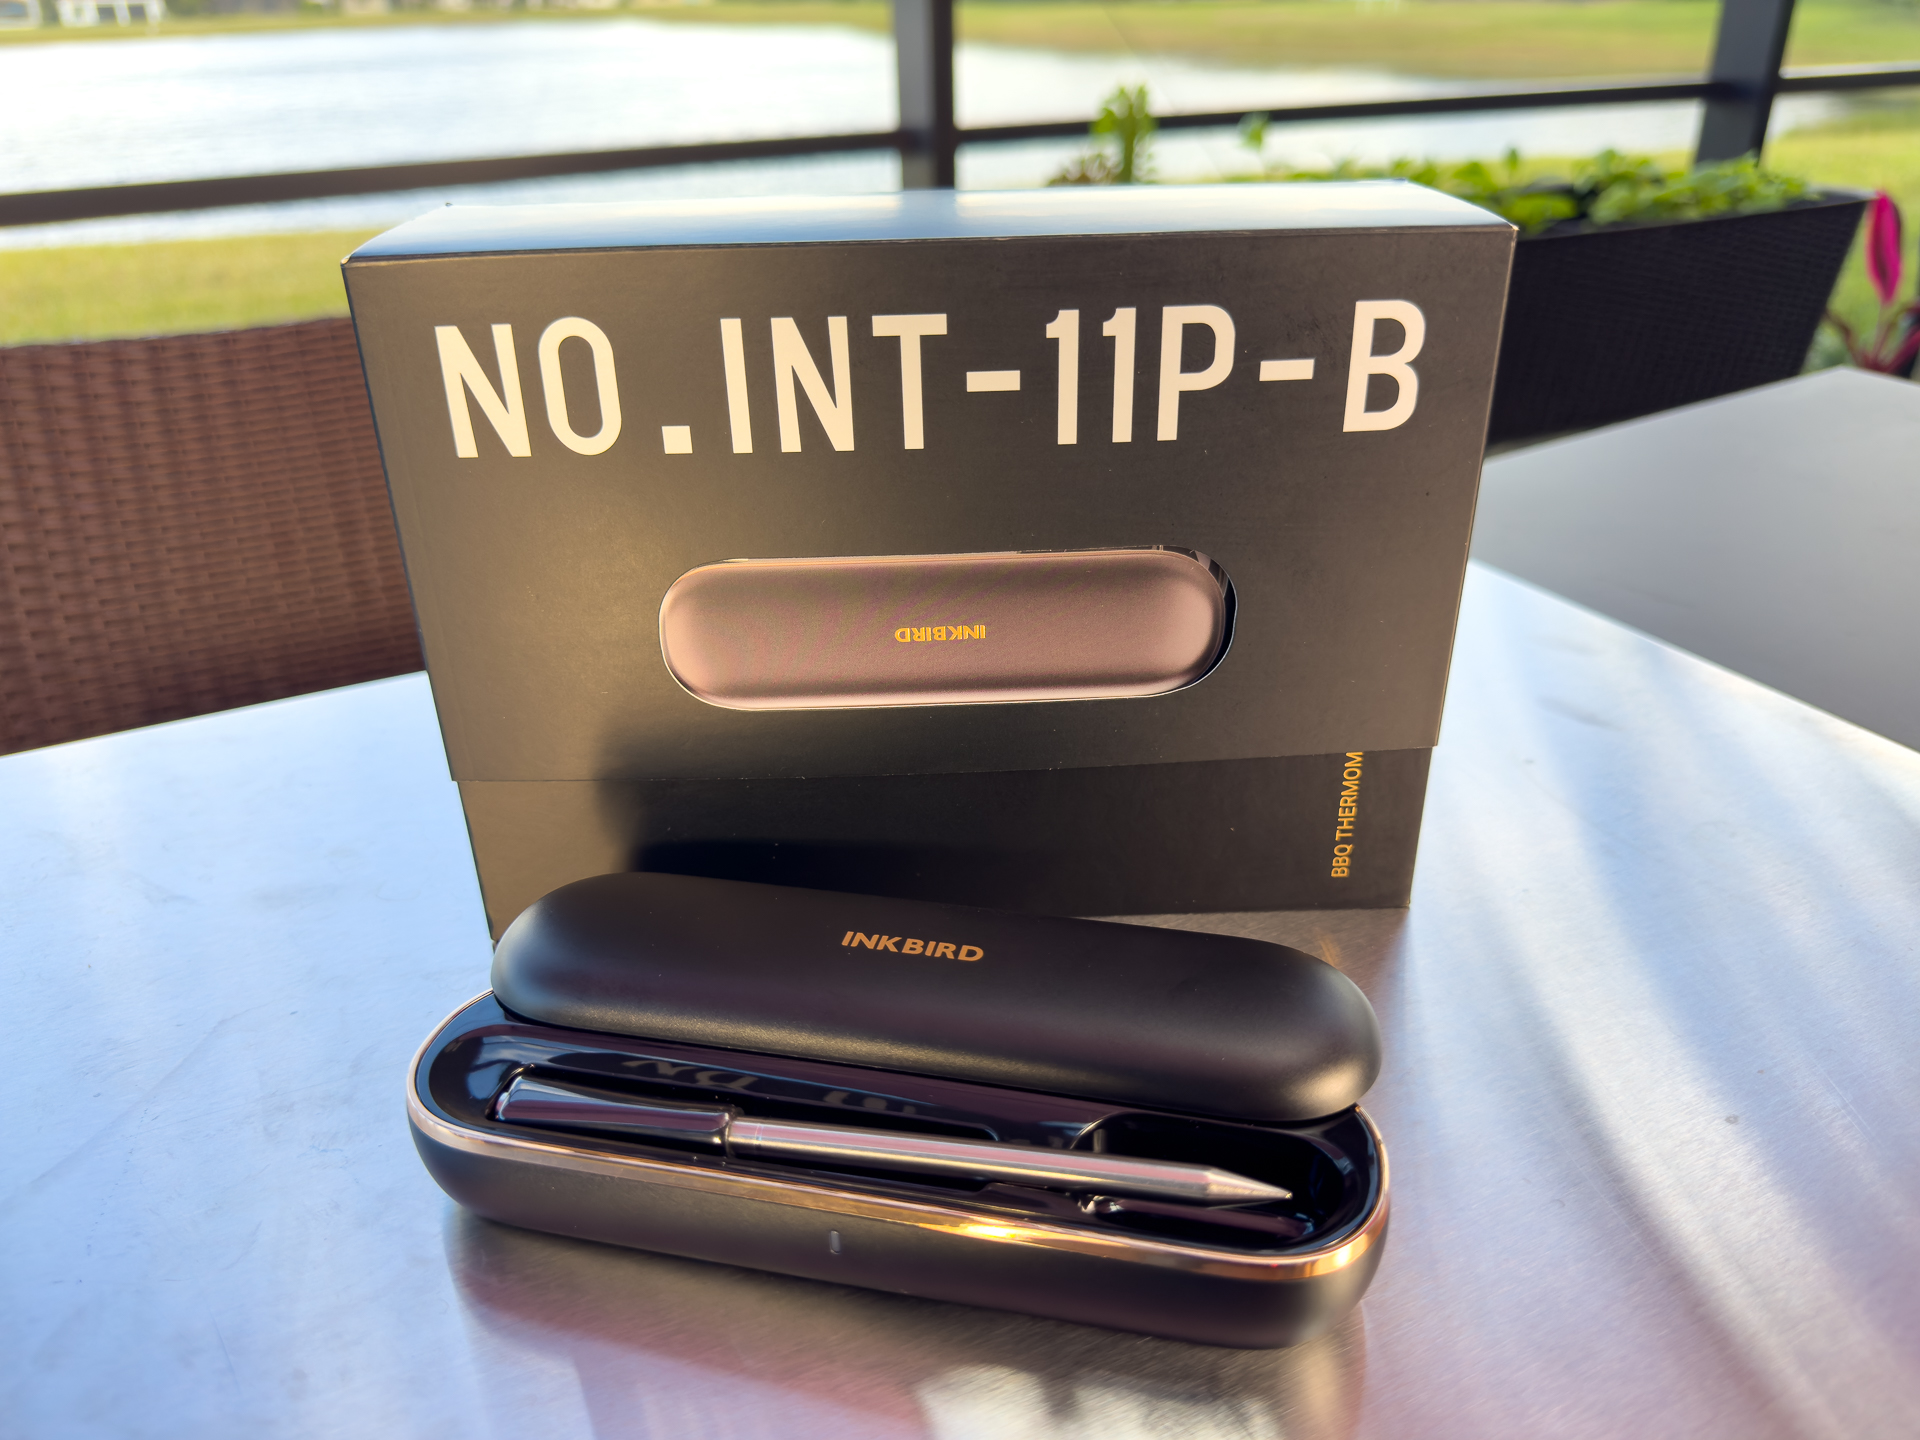 INKBIRD INT-11P-B Review: A True Wireless Experience